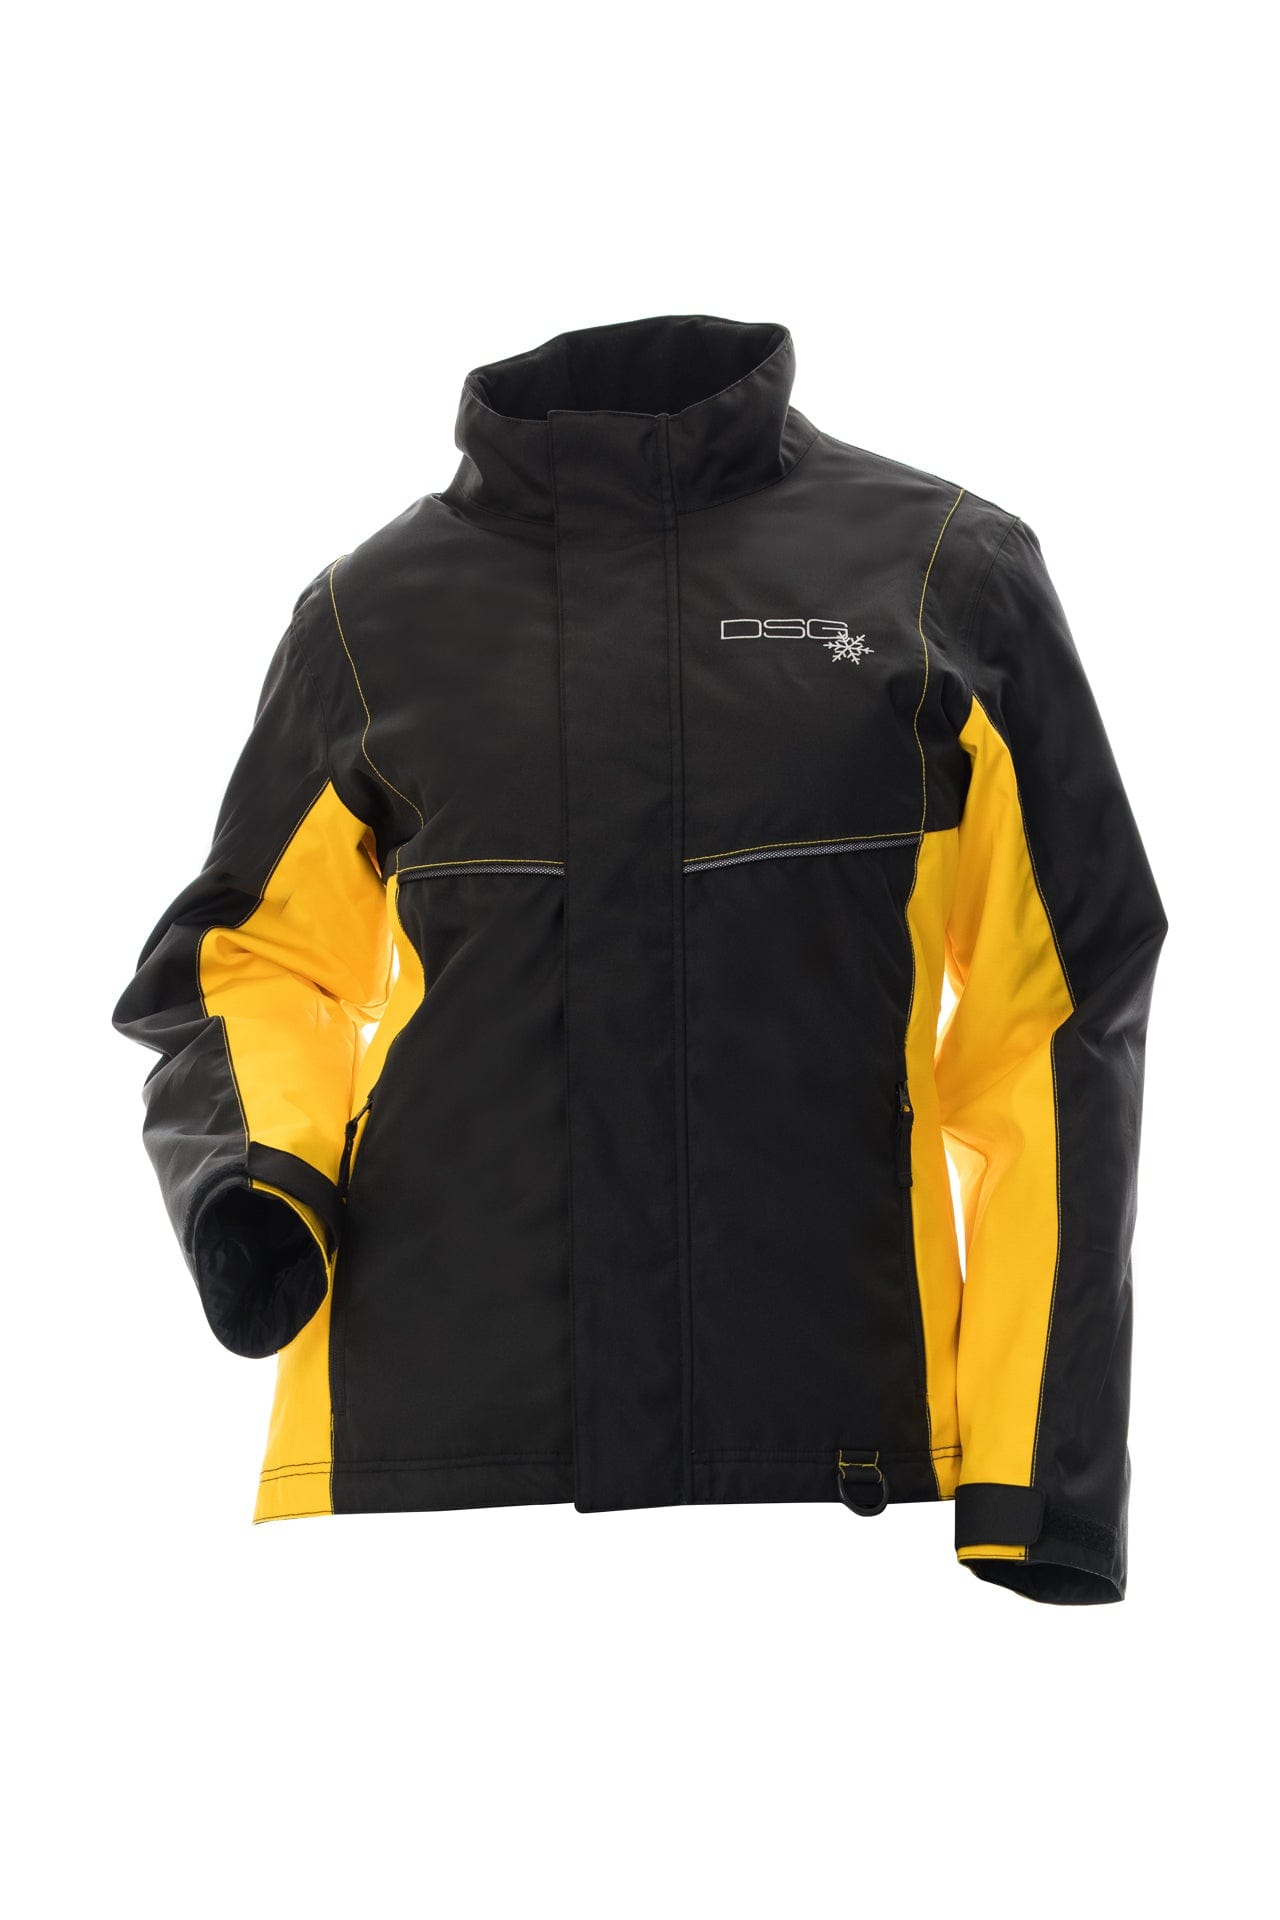 Western Powersports Jacket Black/Pineapple / 1XL Trail Jacket By Dsg 45406